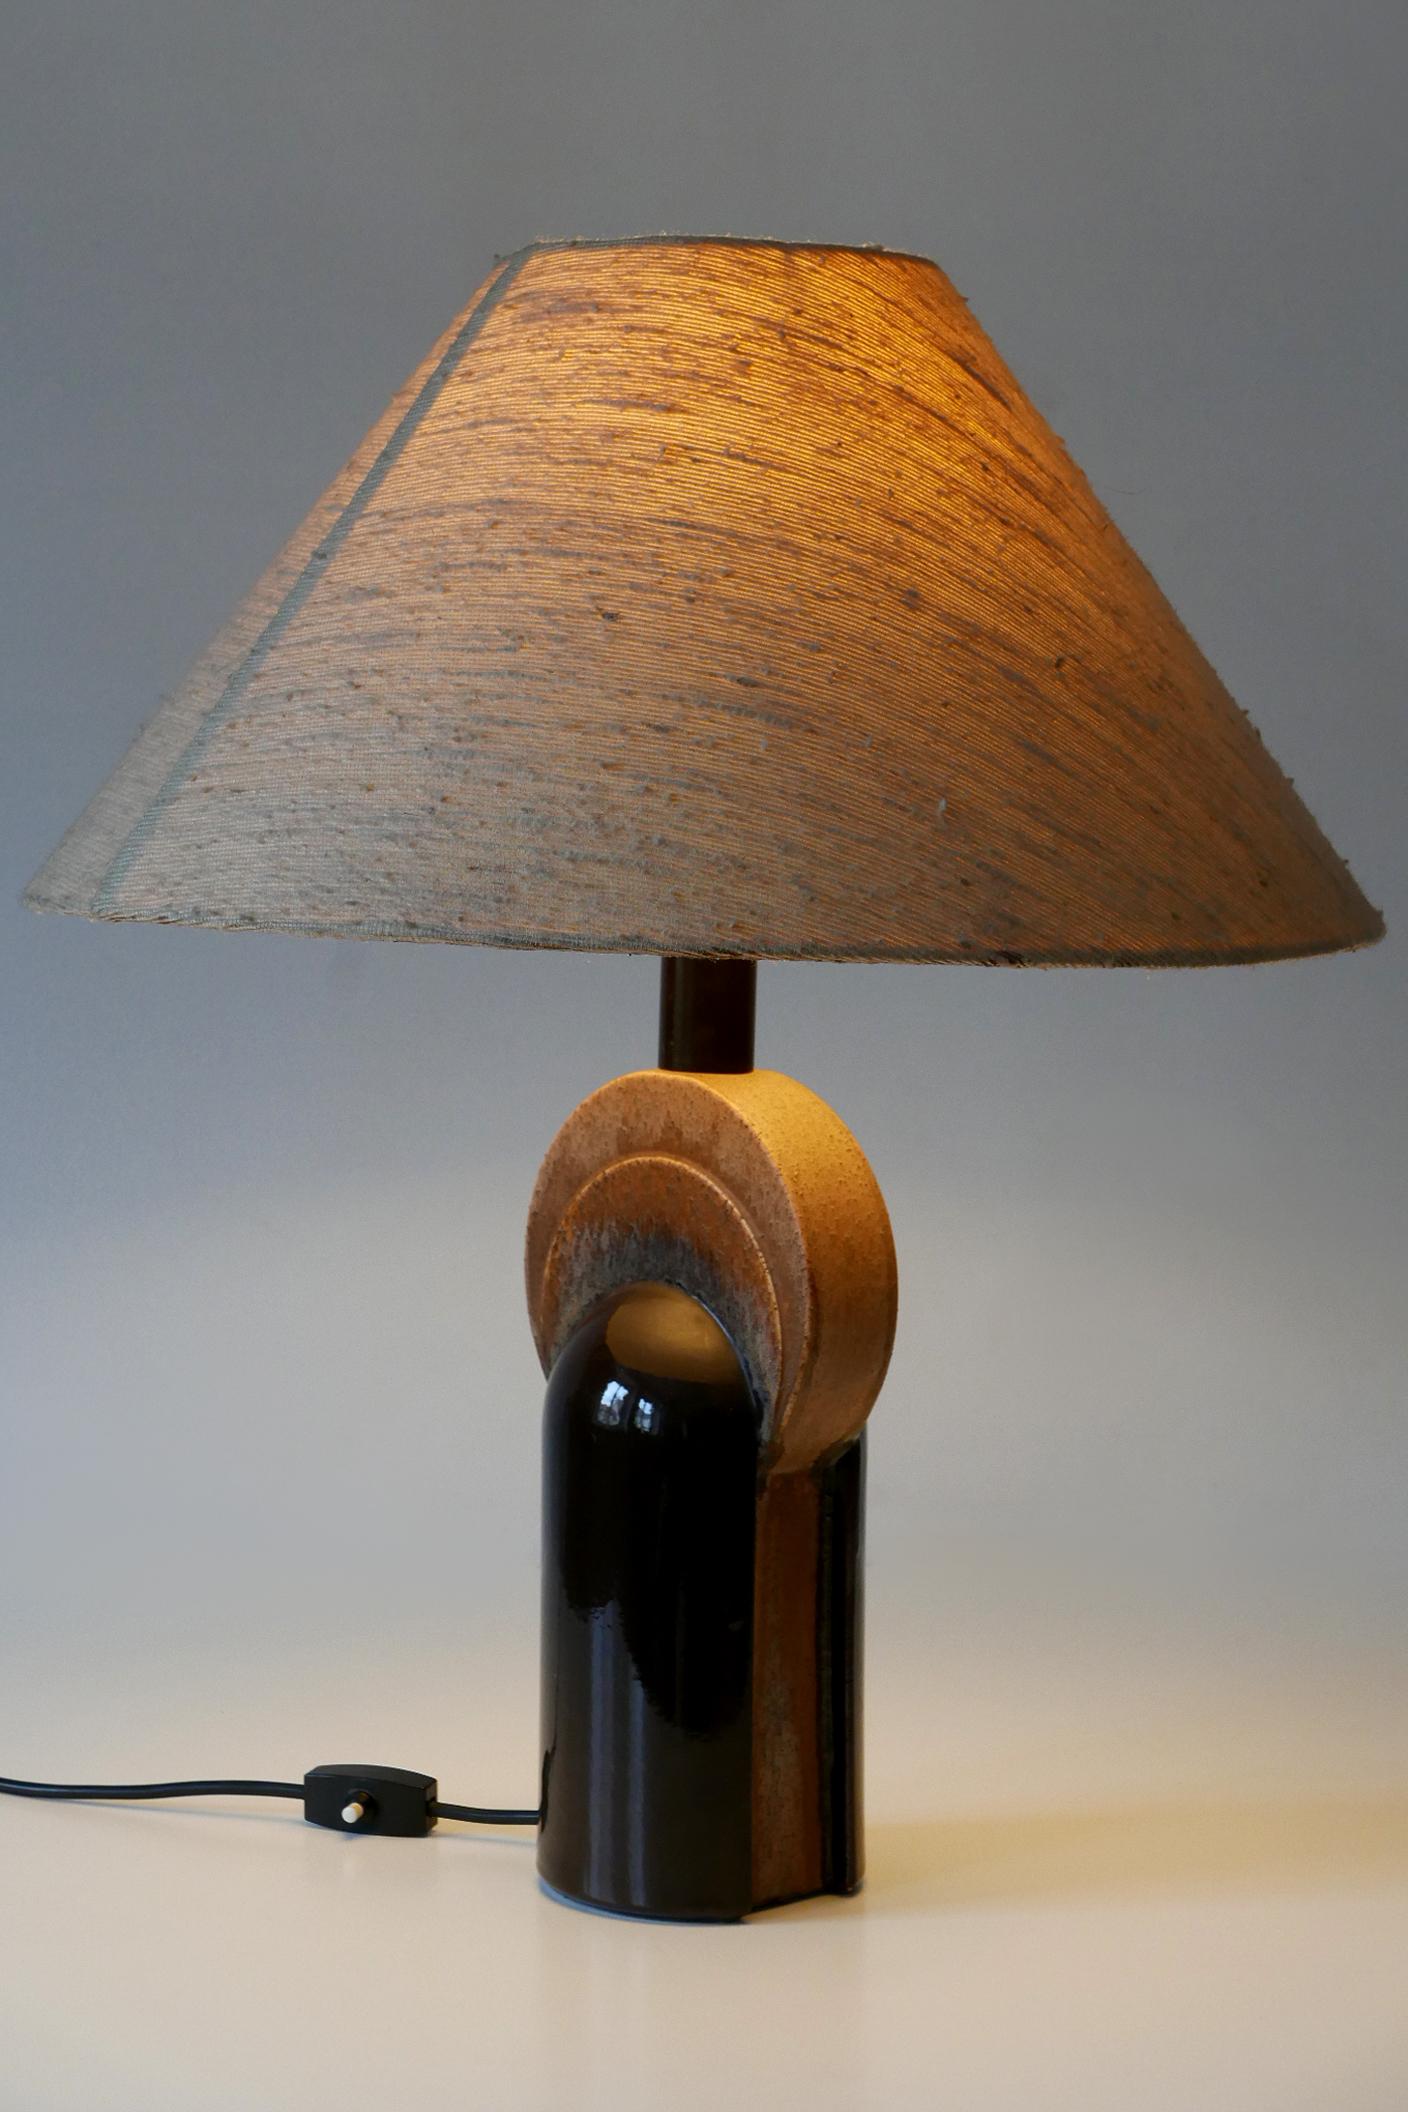 Elegant Mid-Century Modern Ceramic Table Lamp by Leola Design Germany 1960s For Sale 3